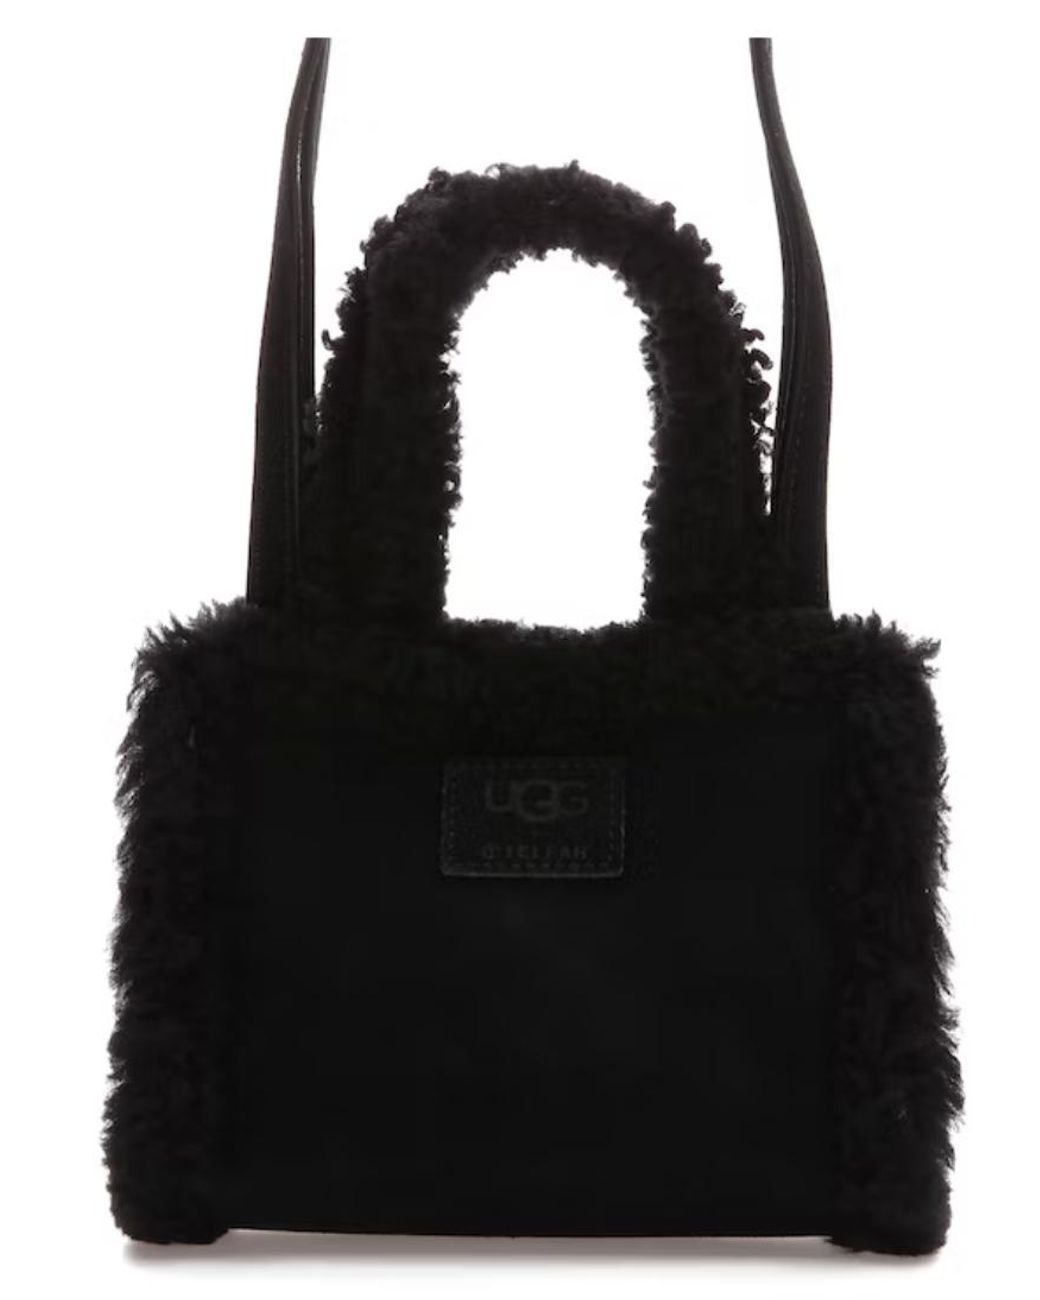 Ugg X Telfar Shopping Bag (Small/Medium/Large; Tan, Black, and